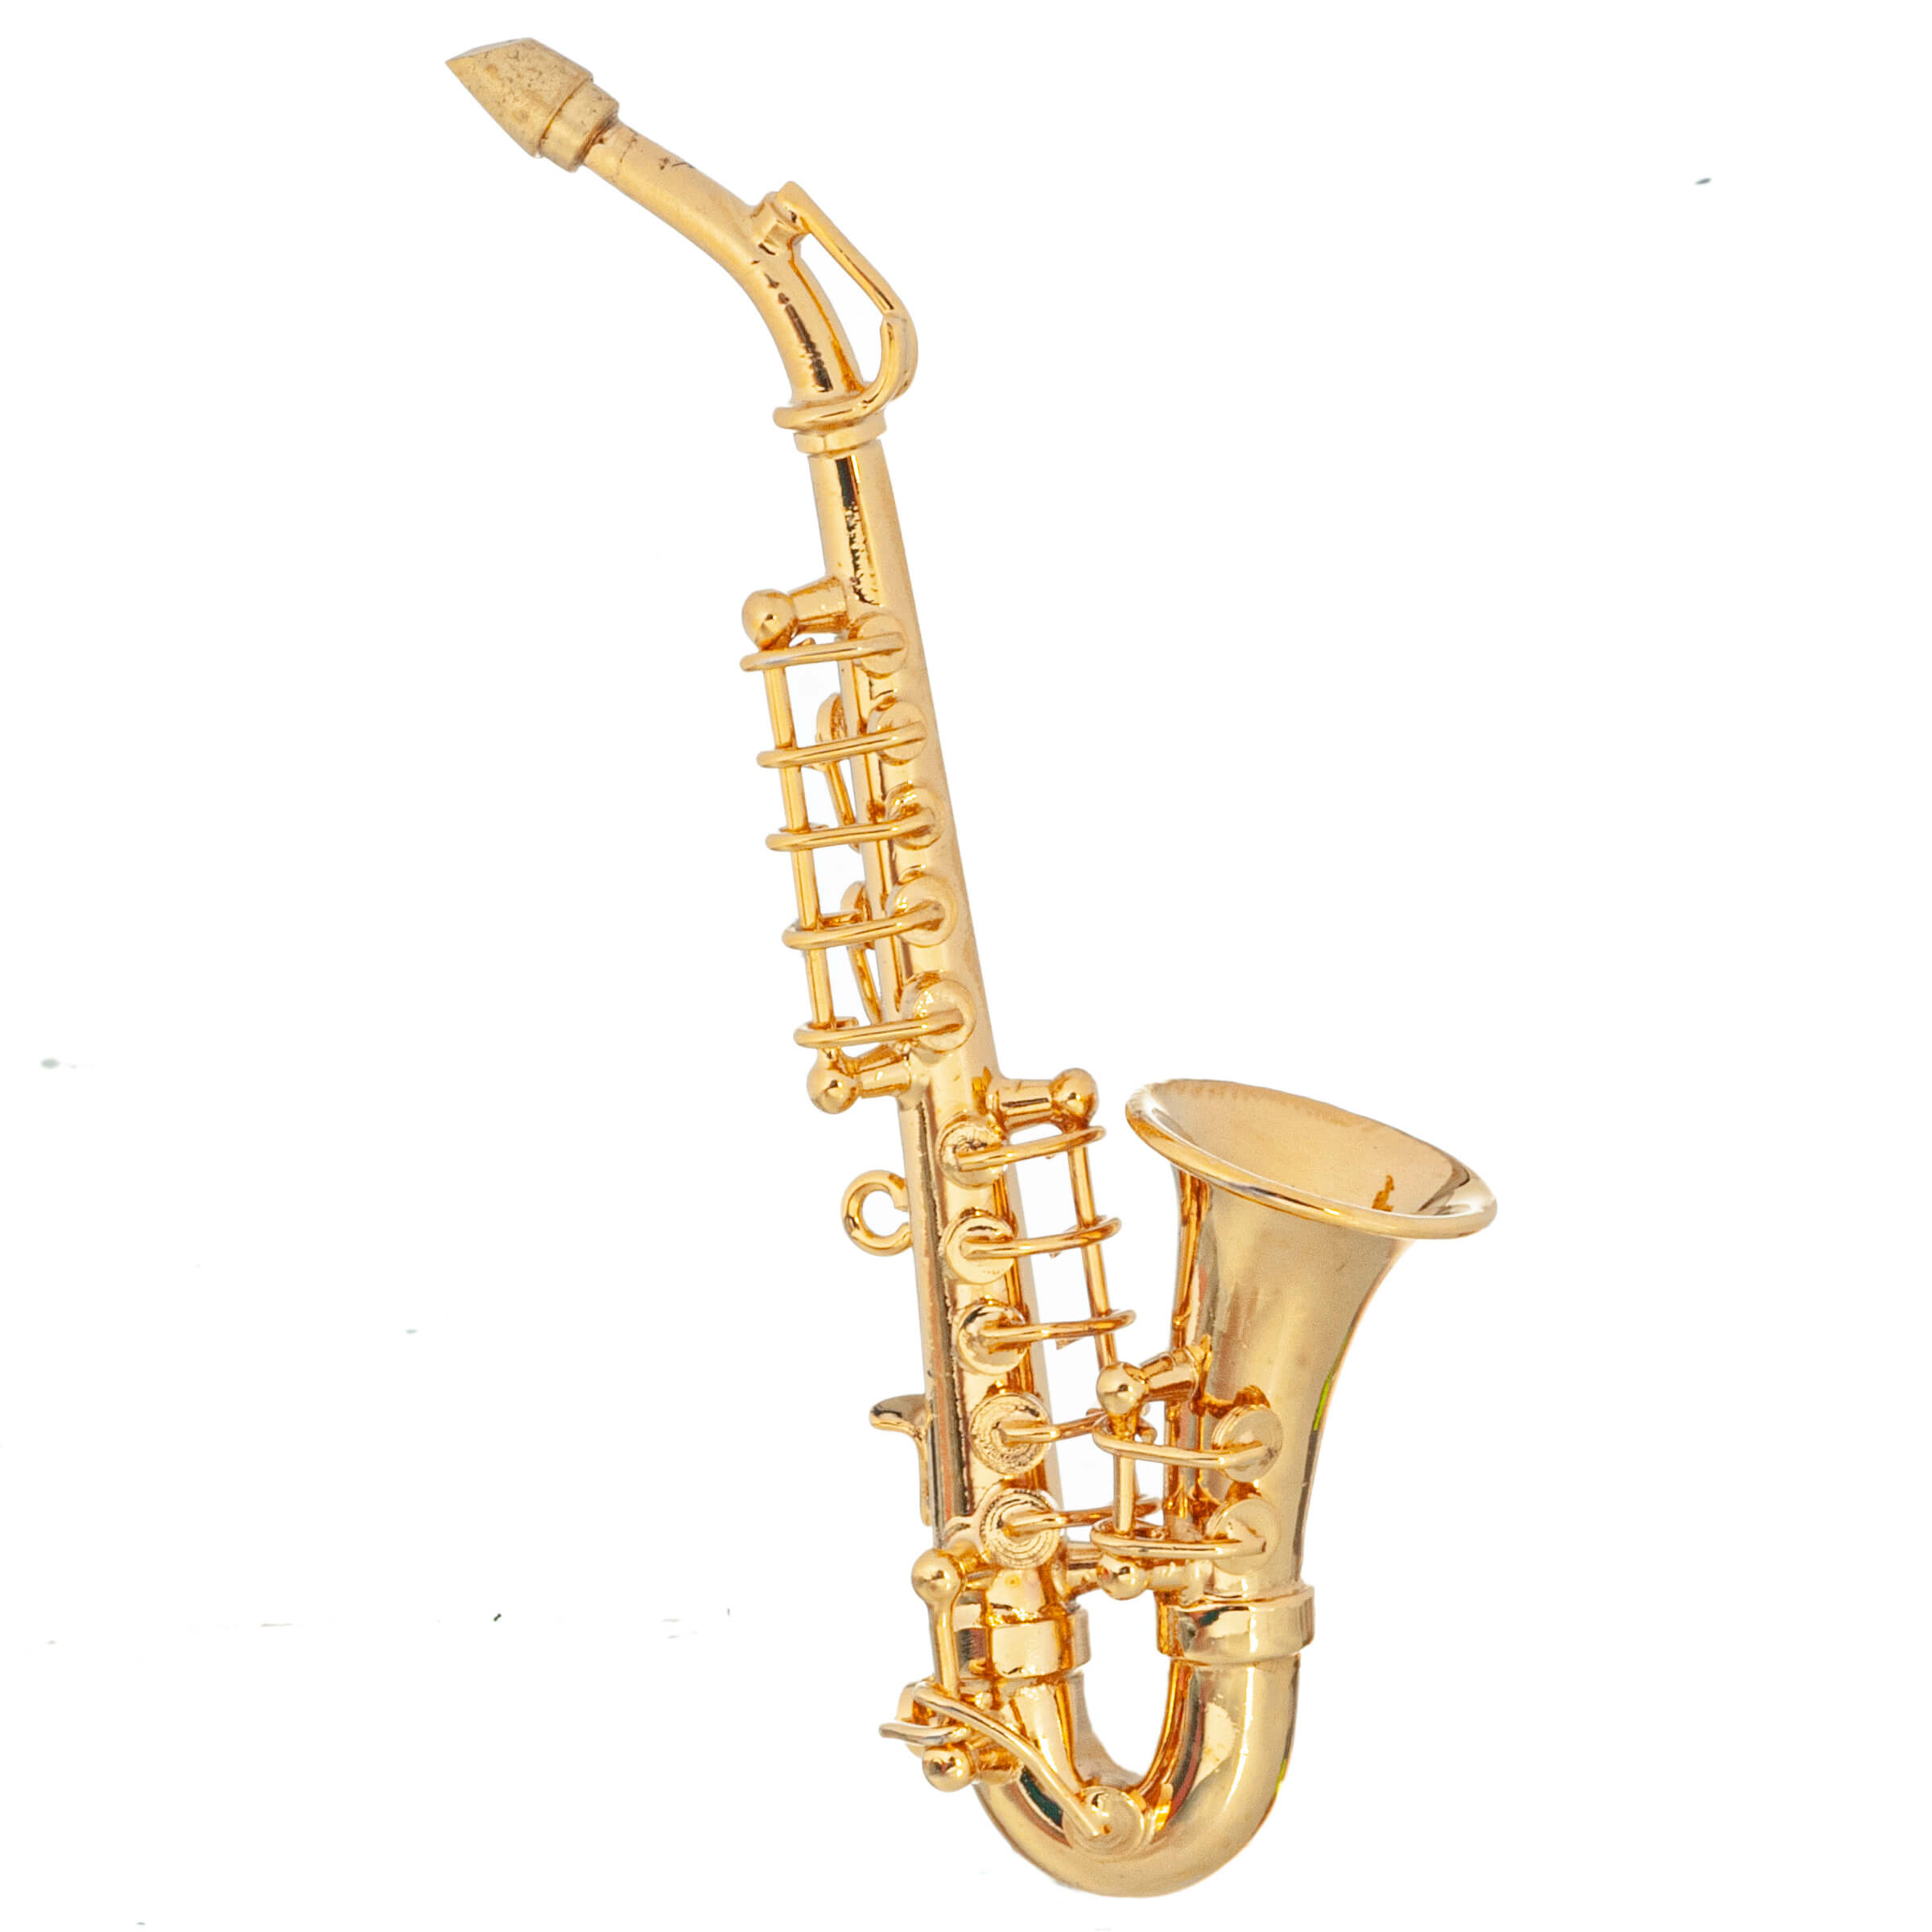 172 Mini Saxophone Images, Stock Photos, 3D objects, & Vectors